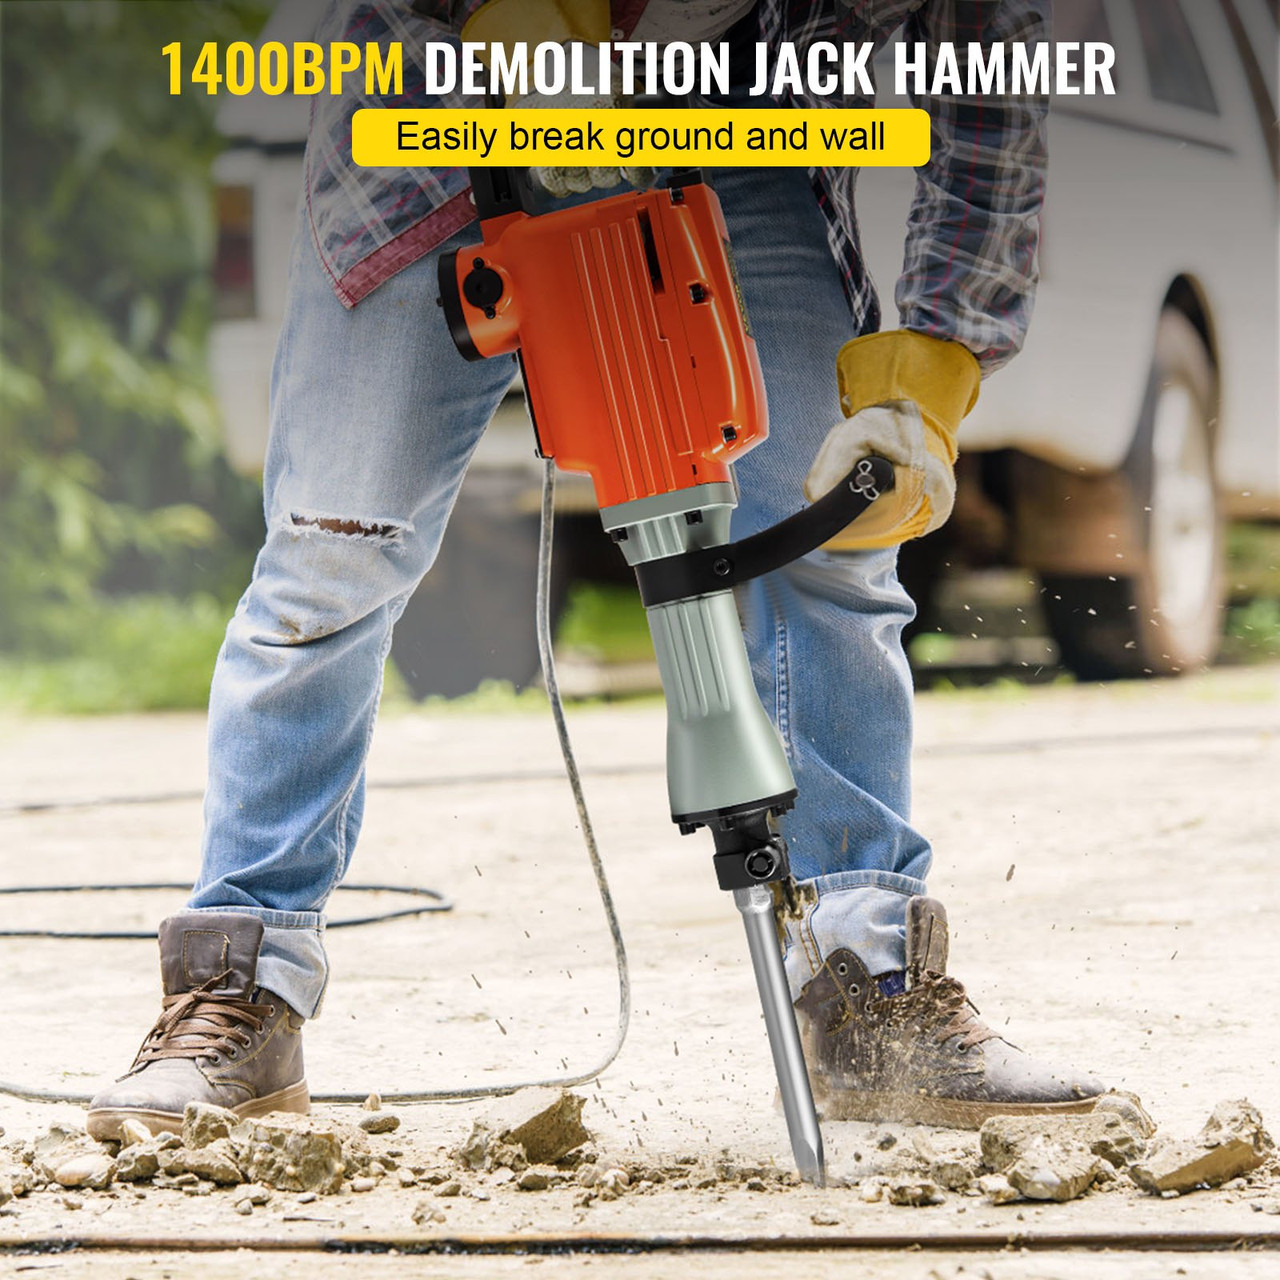 Demolition Jack Hammer 2200W Jack Hammer Concrete Breaker 1400 BPM Heavy Duty Electric Jack Hammer 6pcs Chisels Bit w/Gloves & 360øC Swiveling Front Handle for Trenching and Breaking Holes